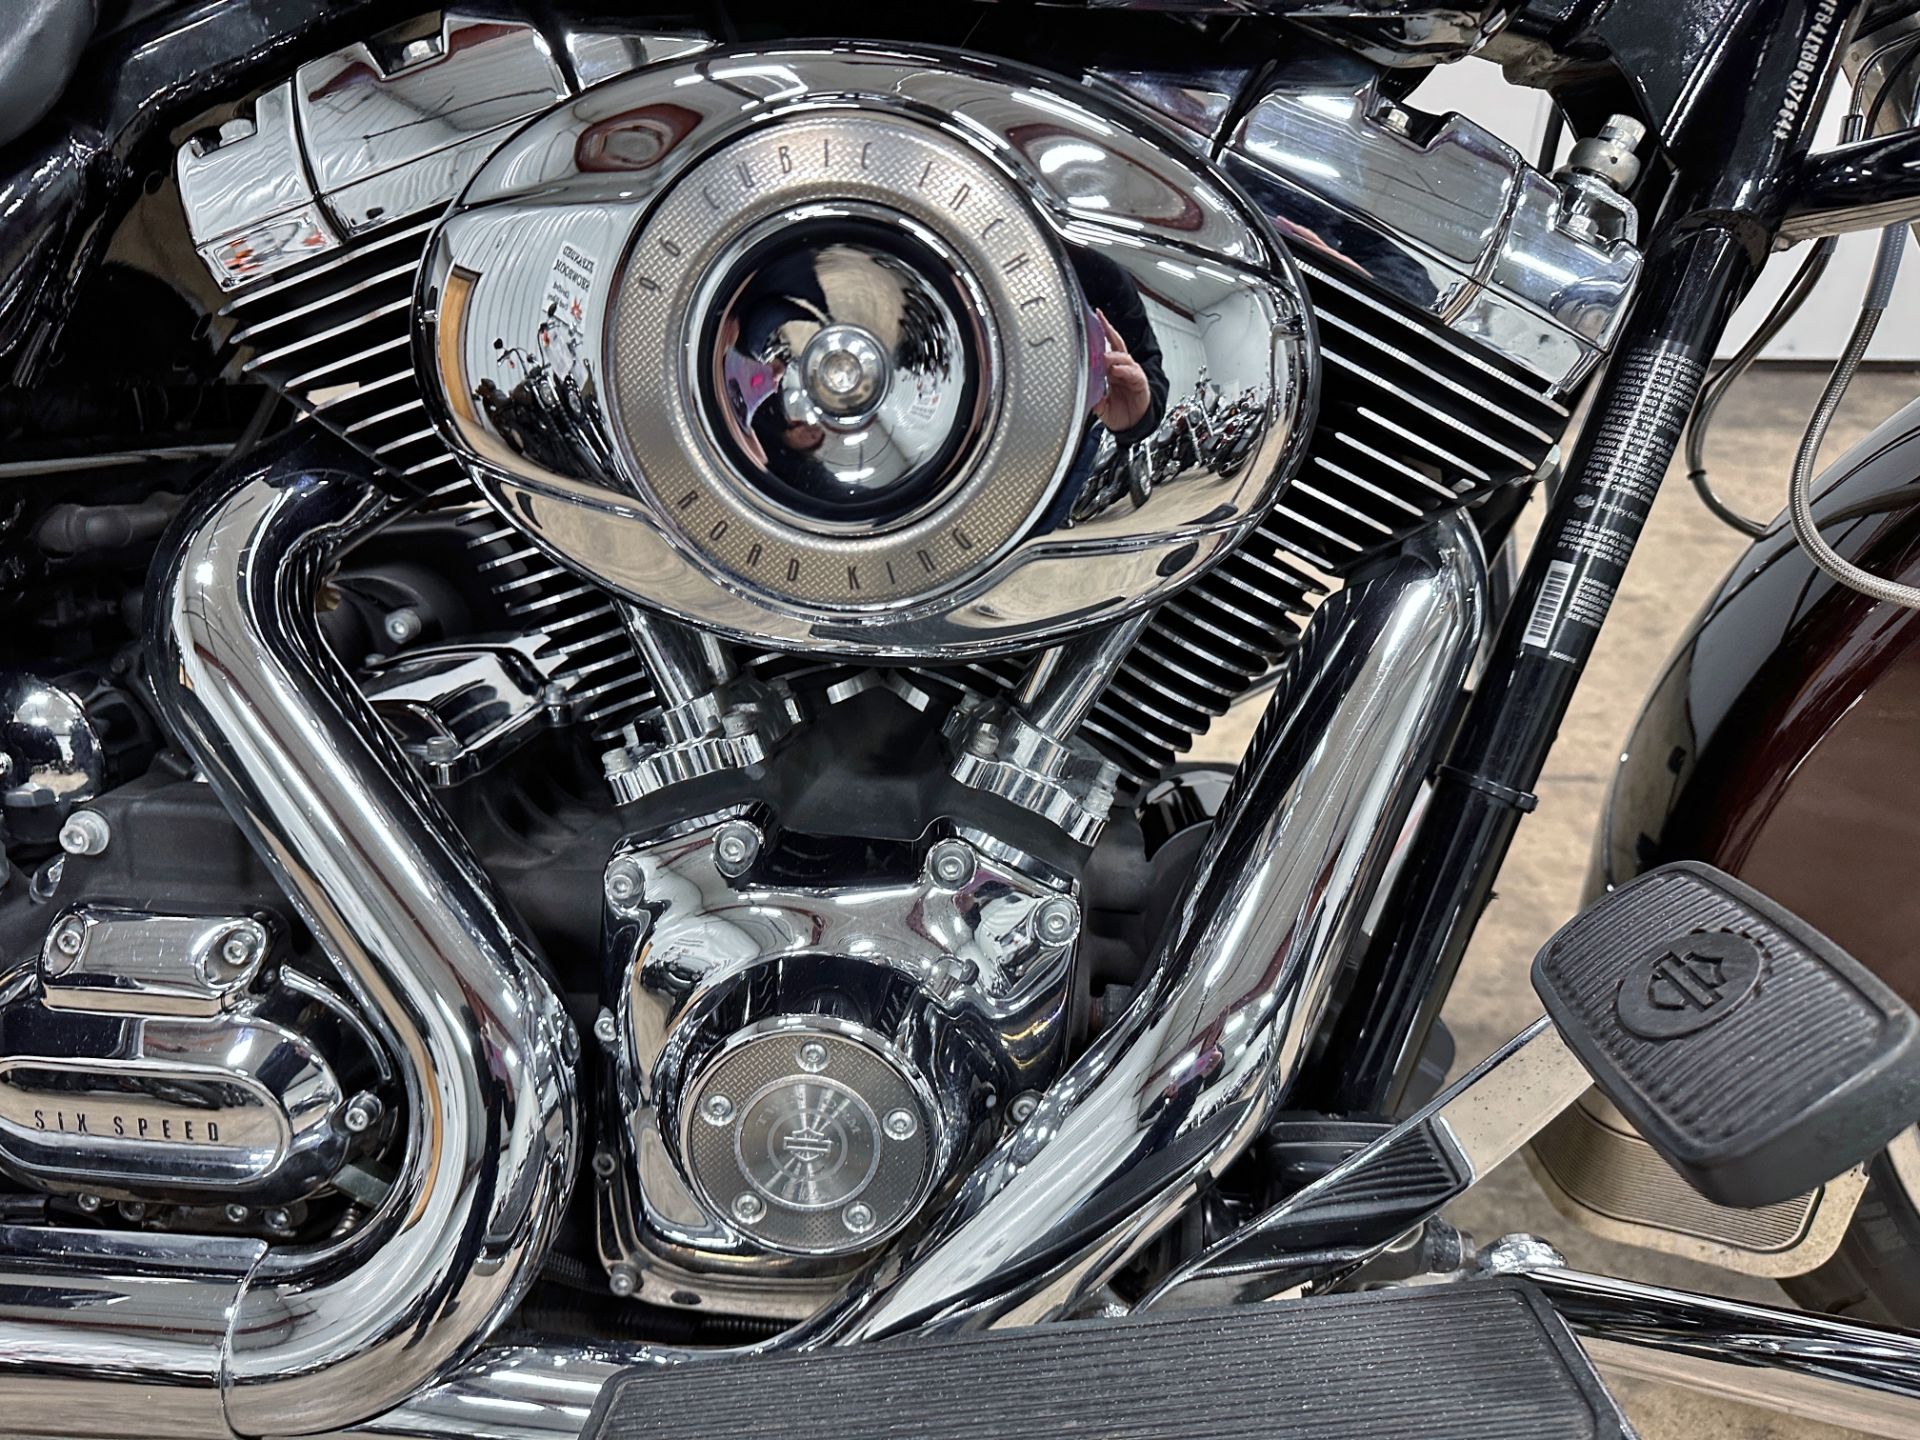 2011 Harley-Davidson Road King® in Sandusky, Ohio - Photo 2